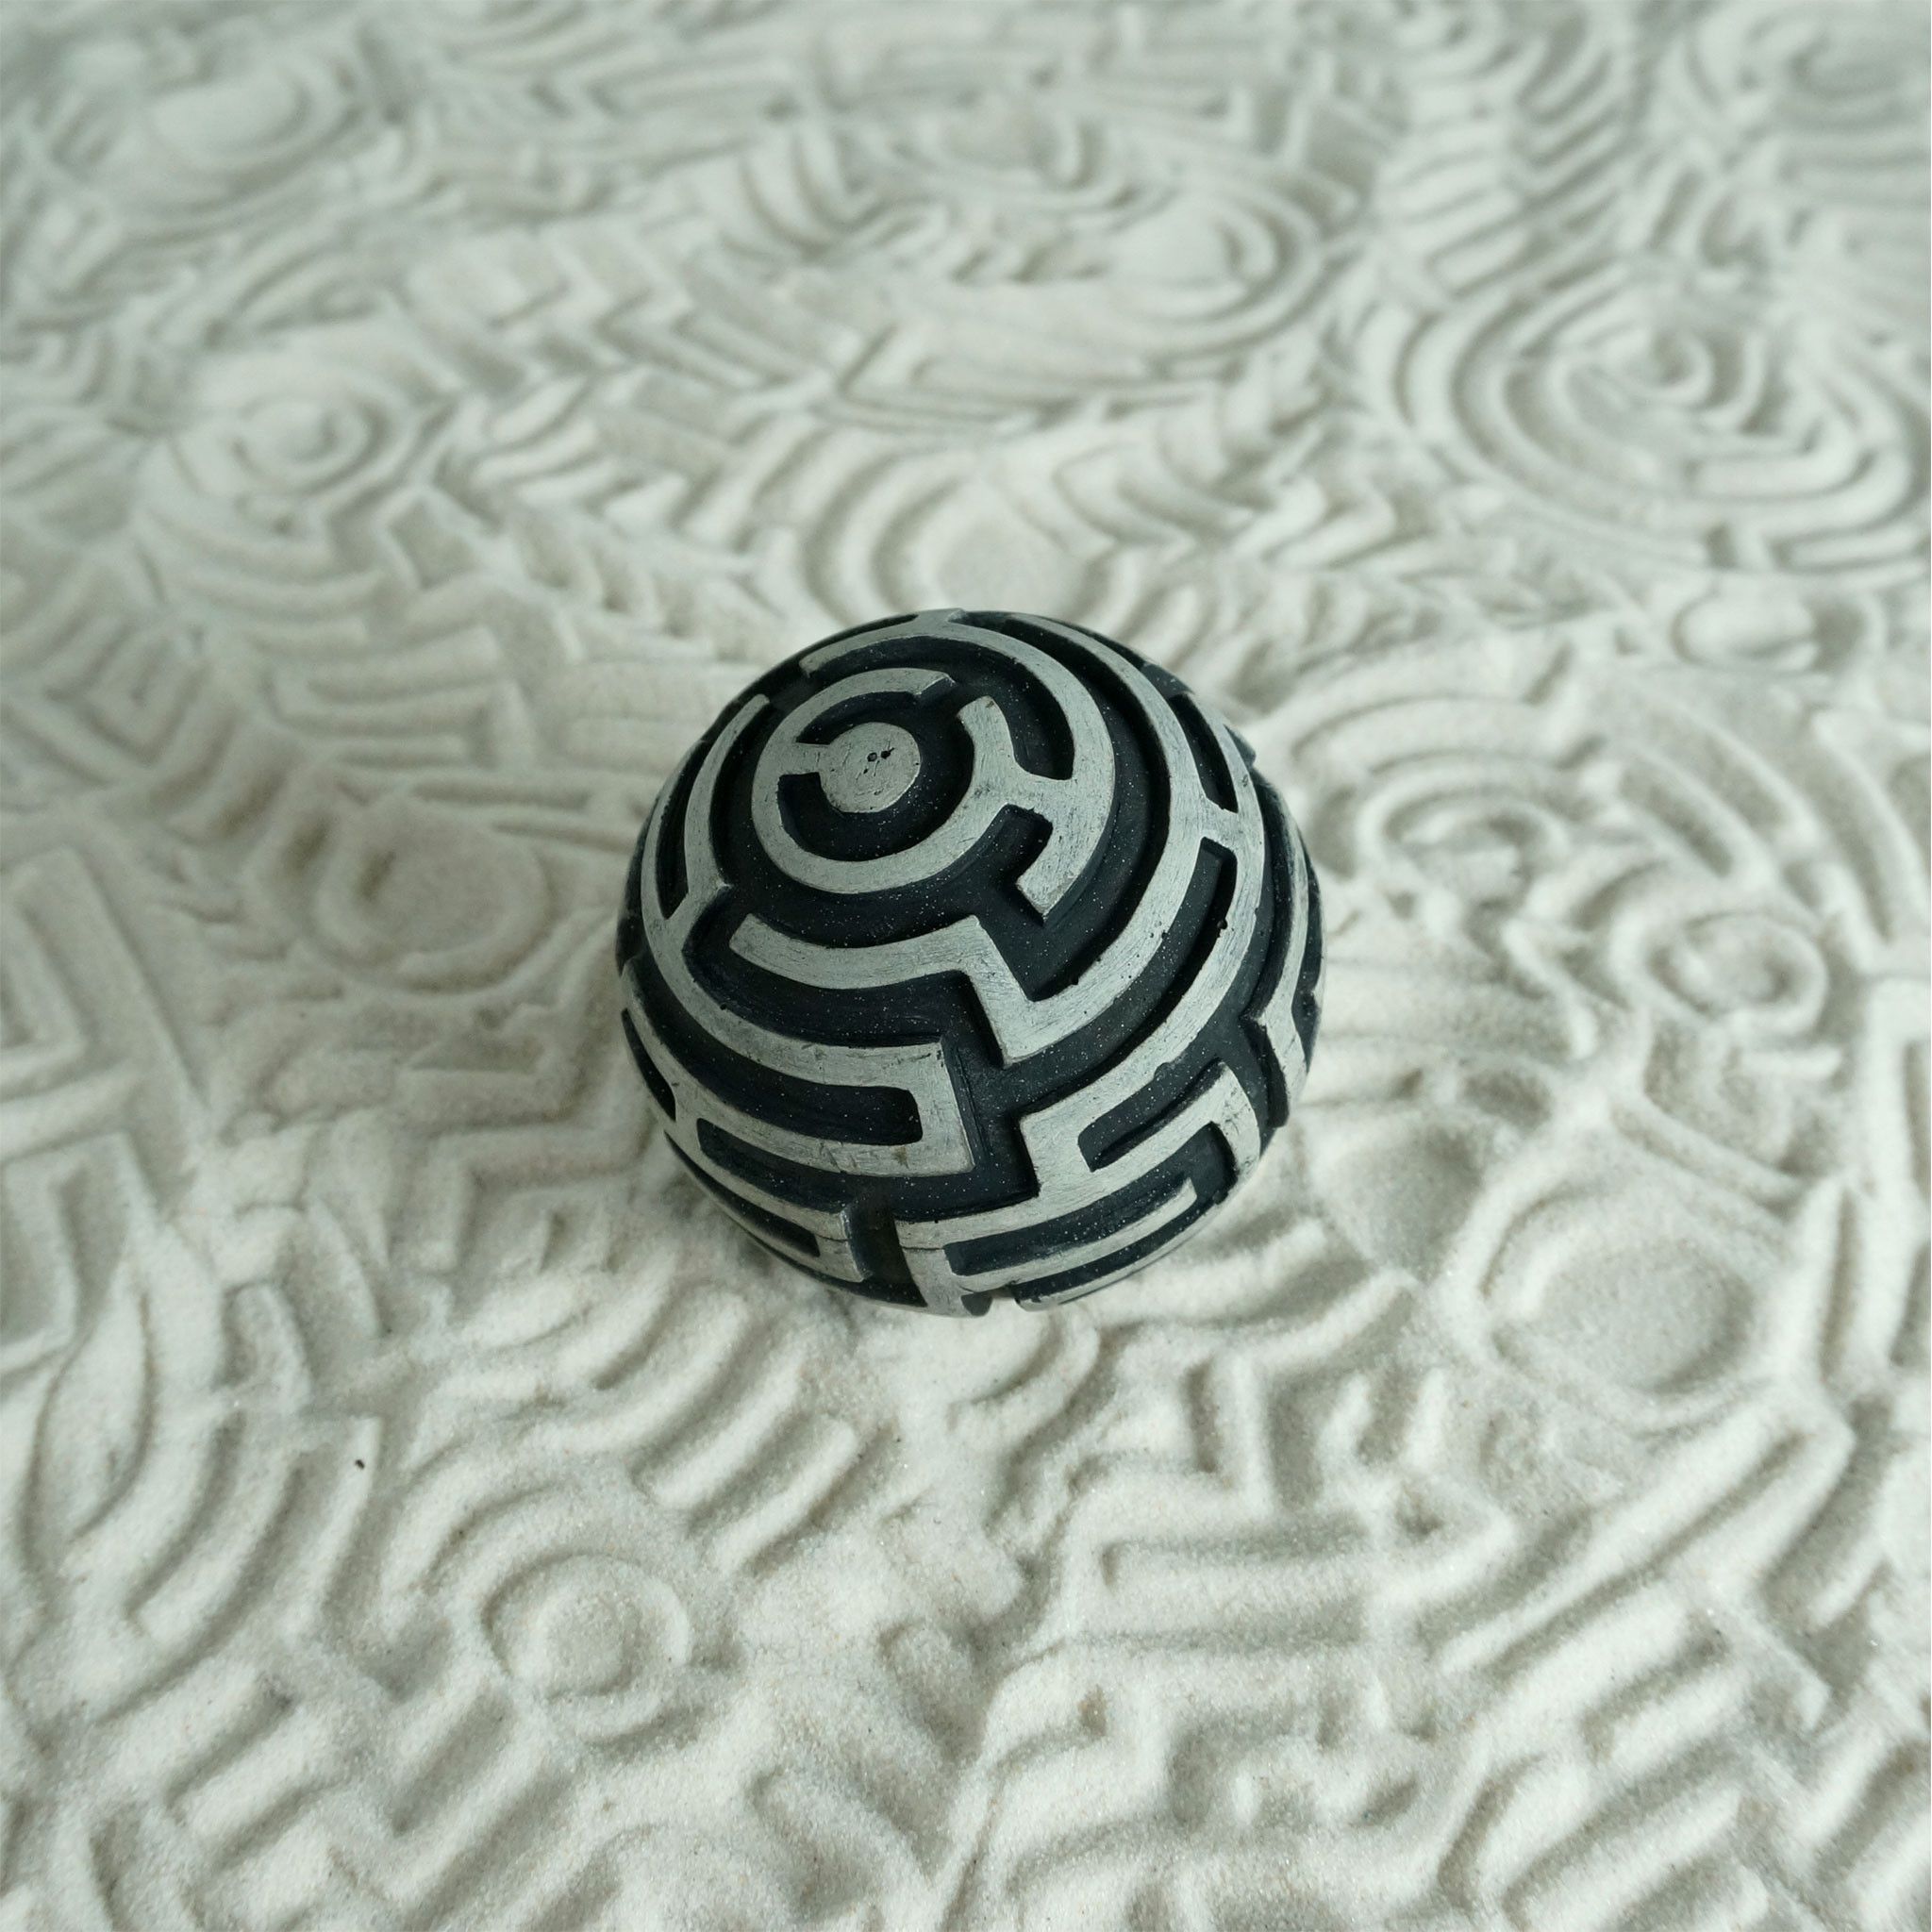 Textured Cement Sand Sphere for Sand Play: Maze Design | Maze design ...